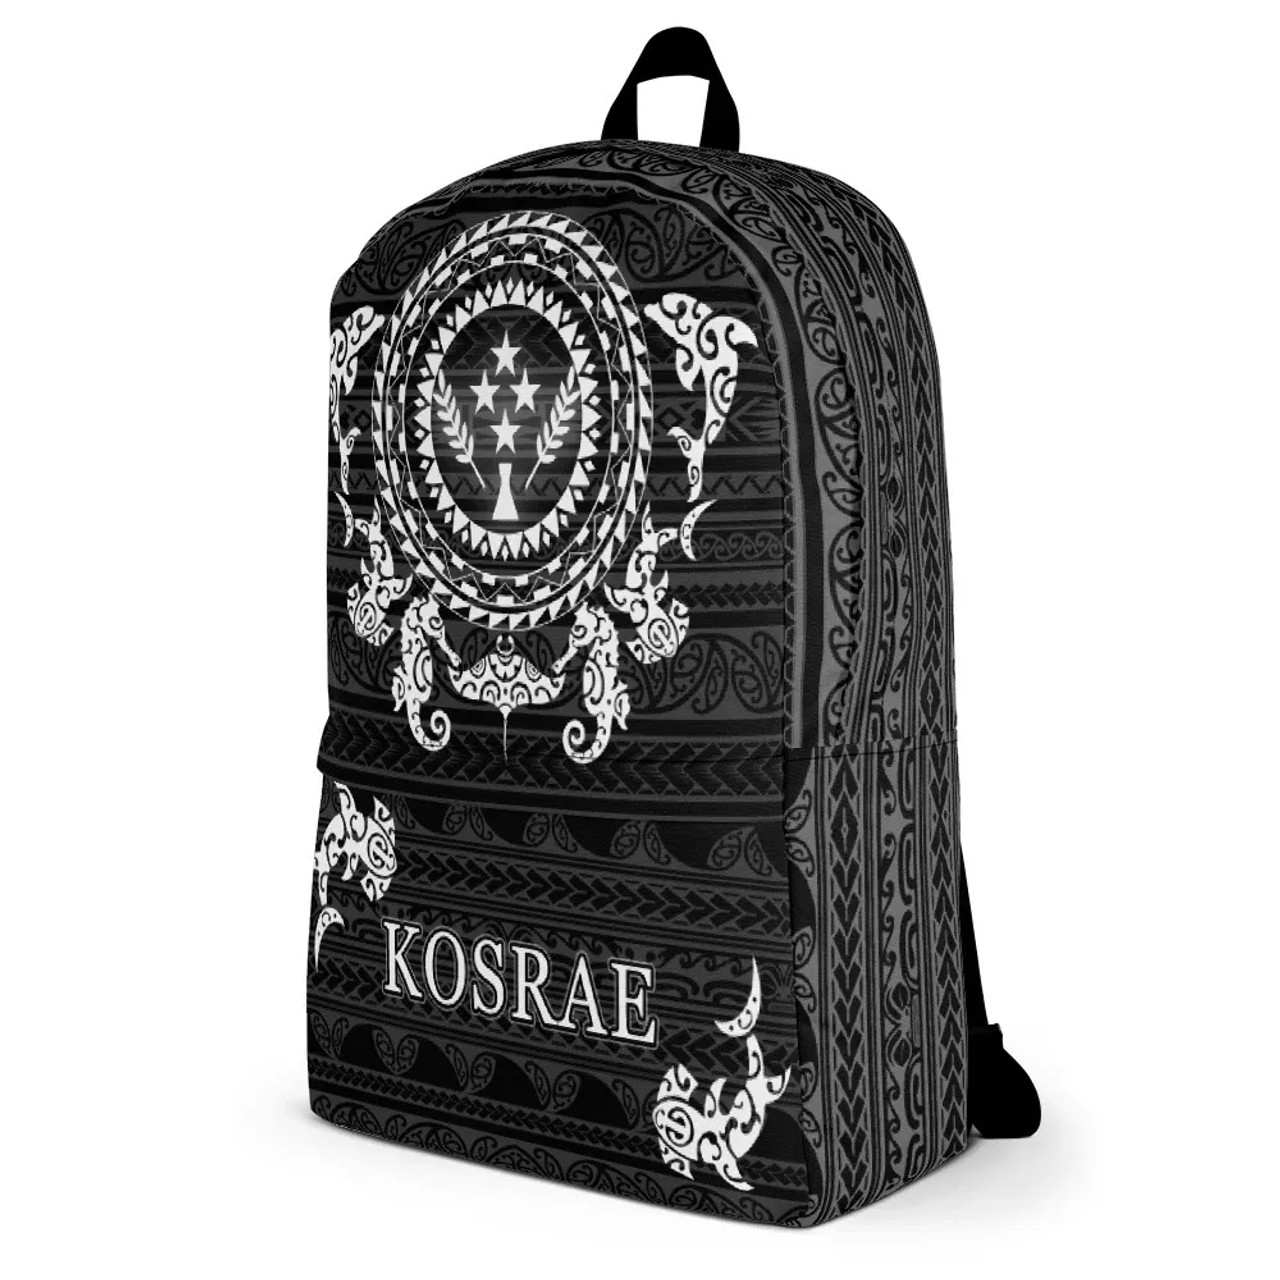 Kosrae State Backpack - Ocean Animals 3